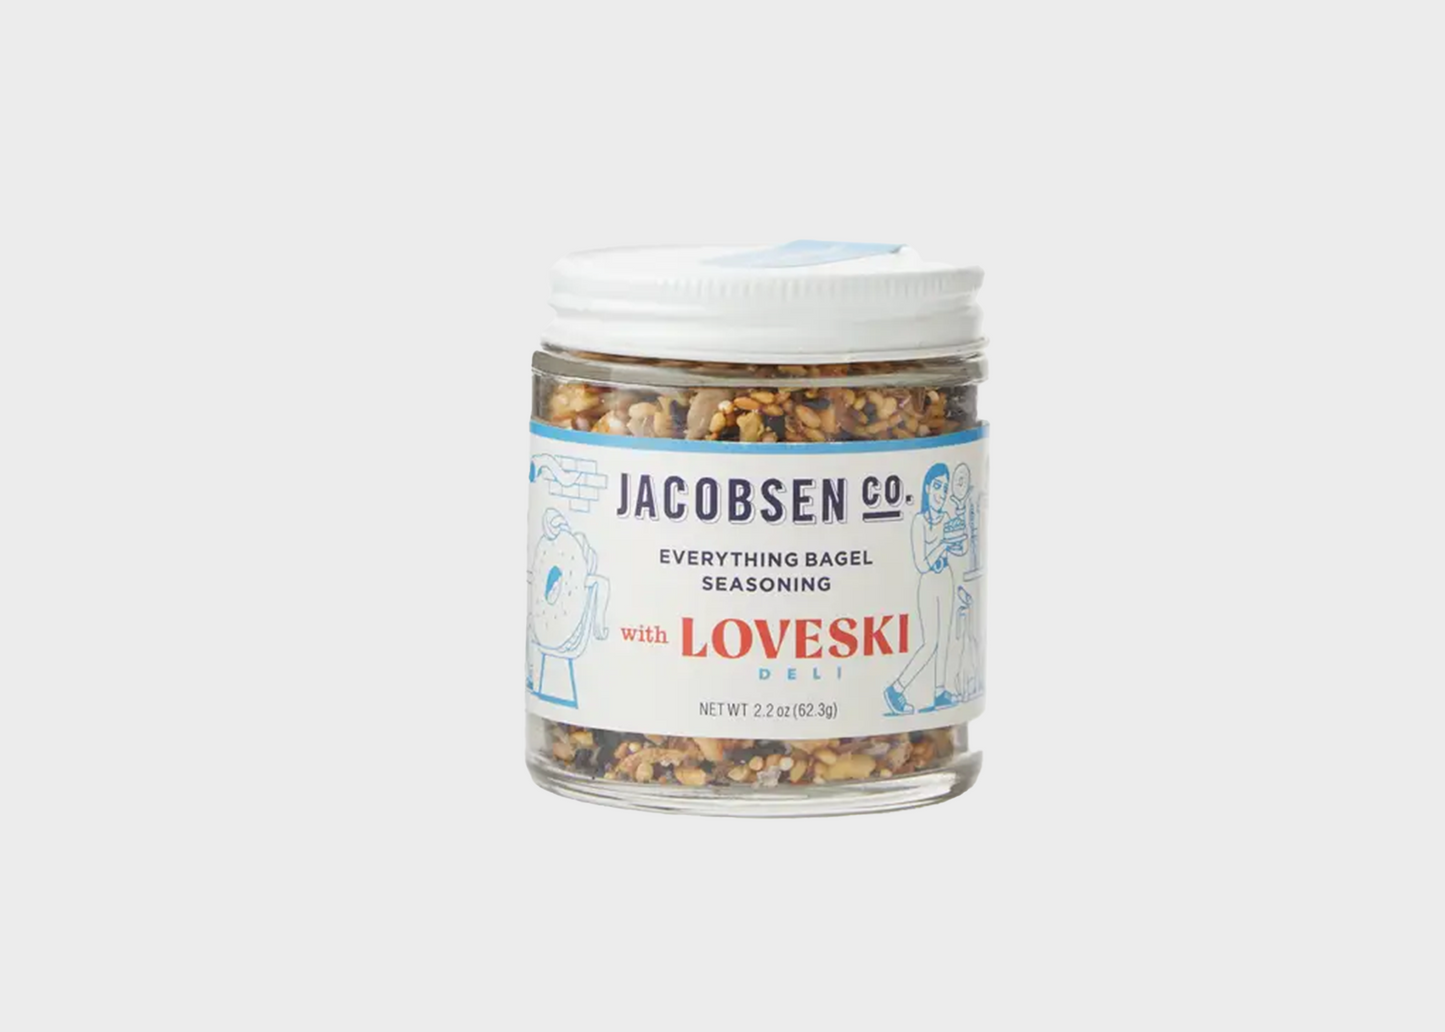 Everything Bagel Seasoning by Jacobsen Co.